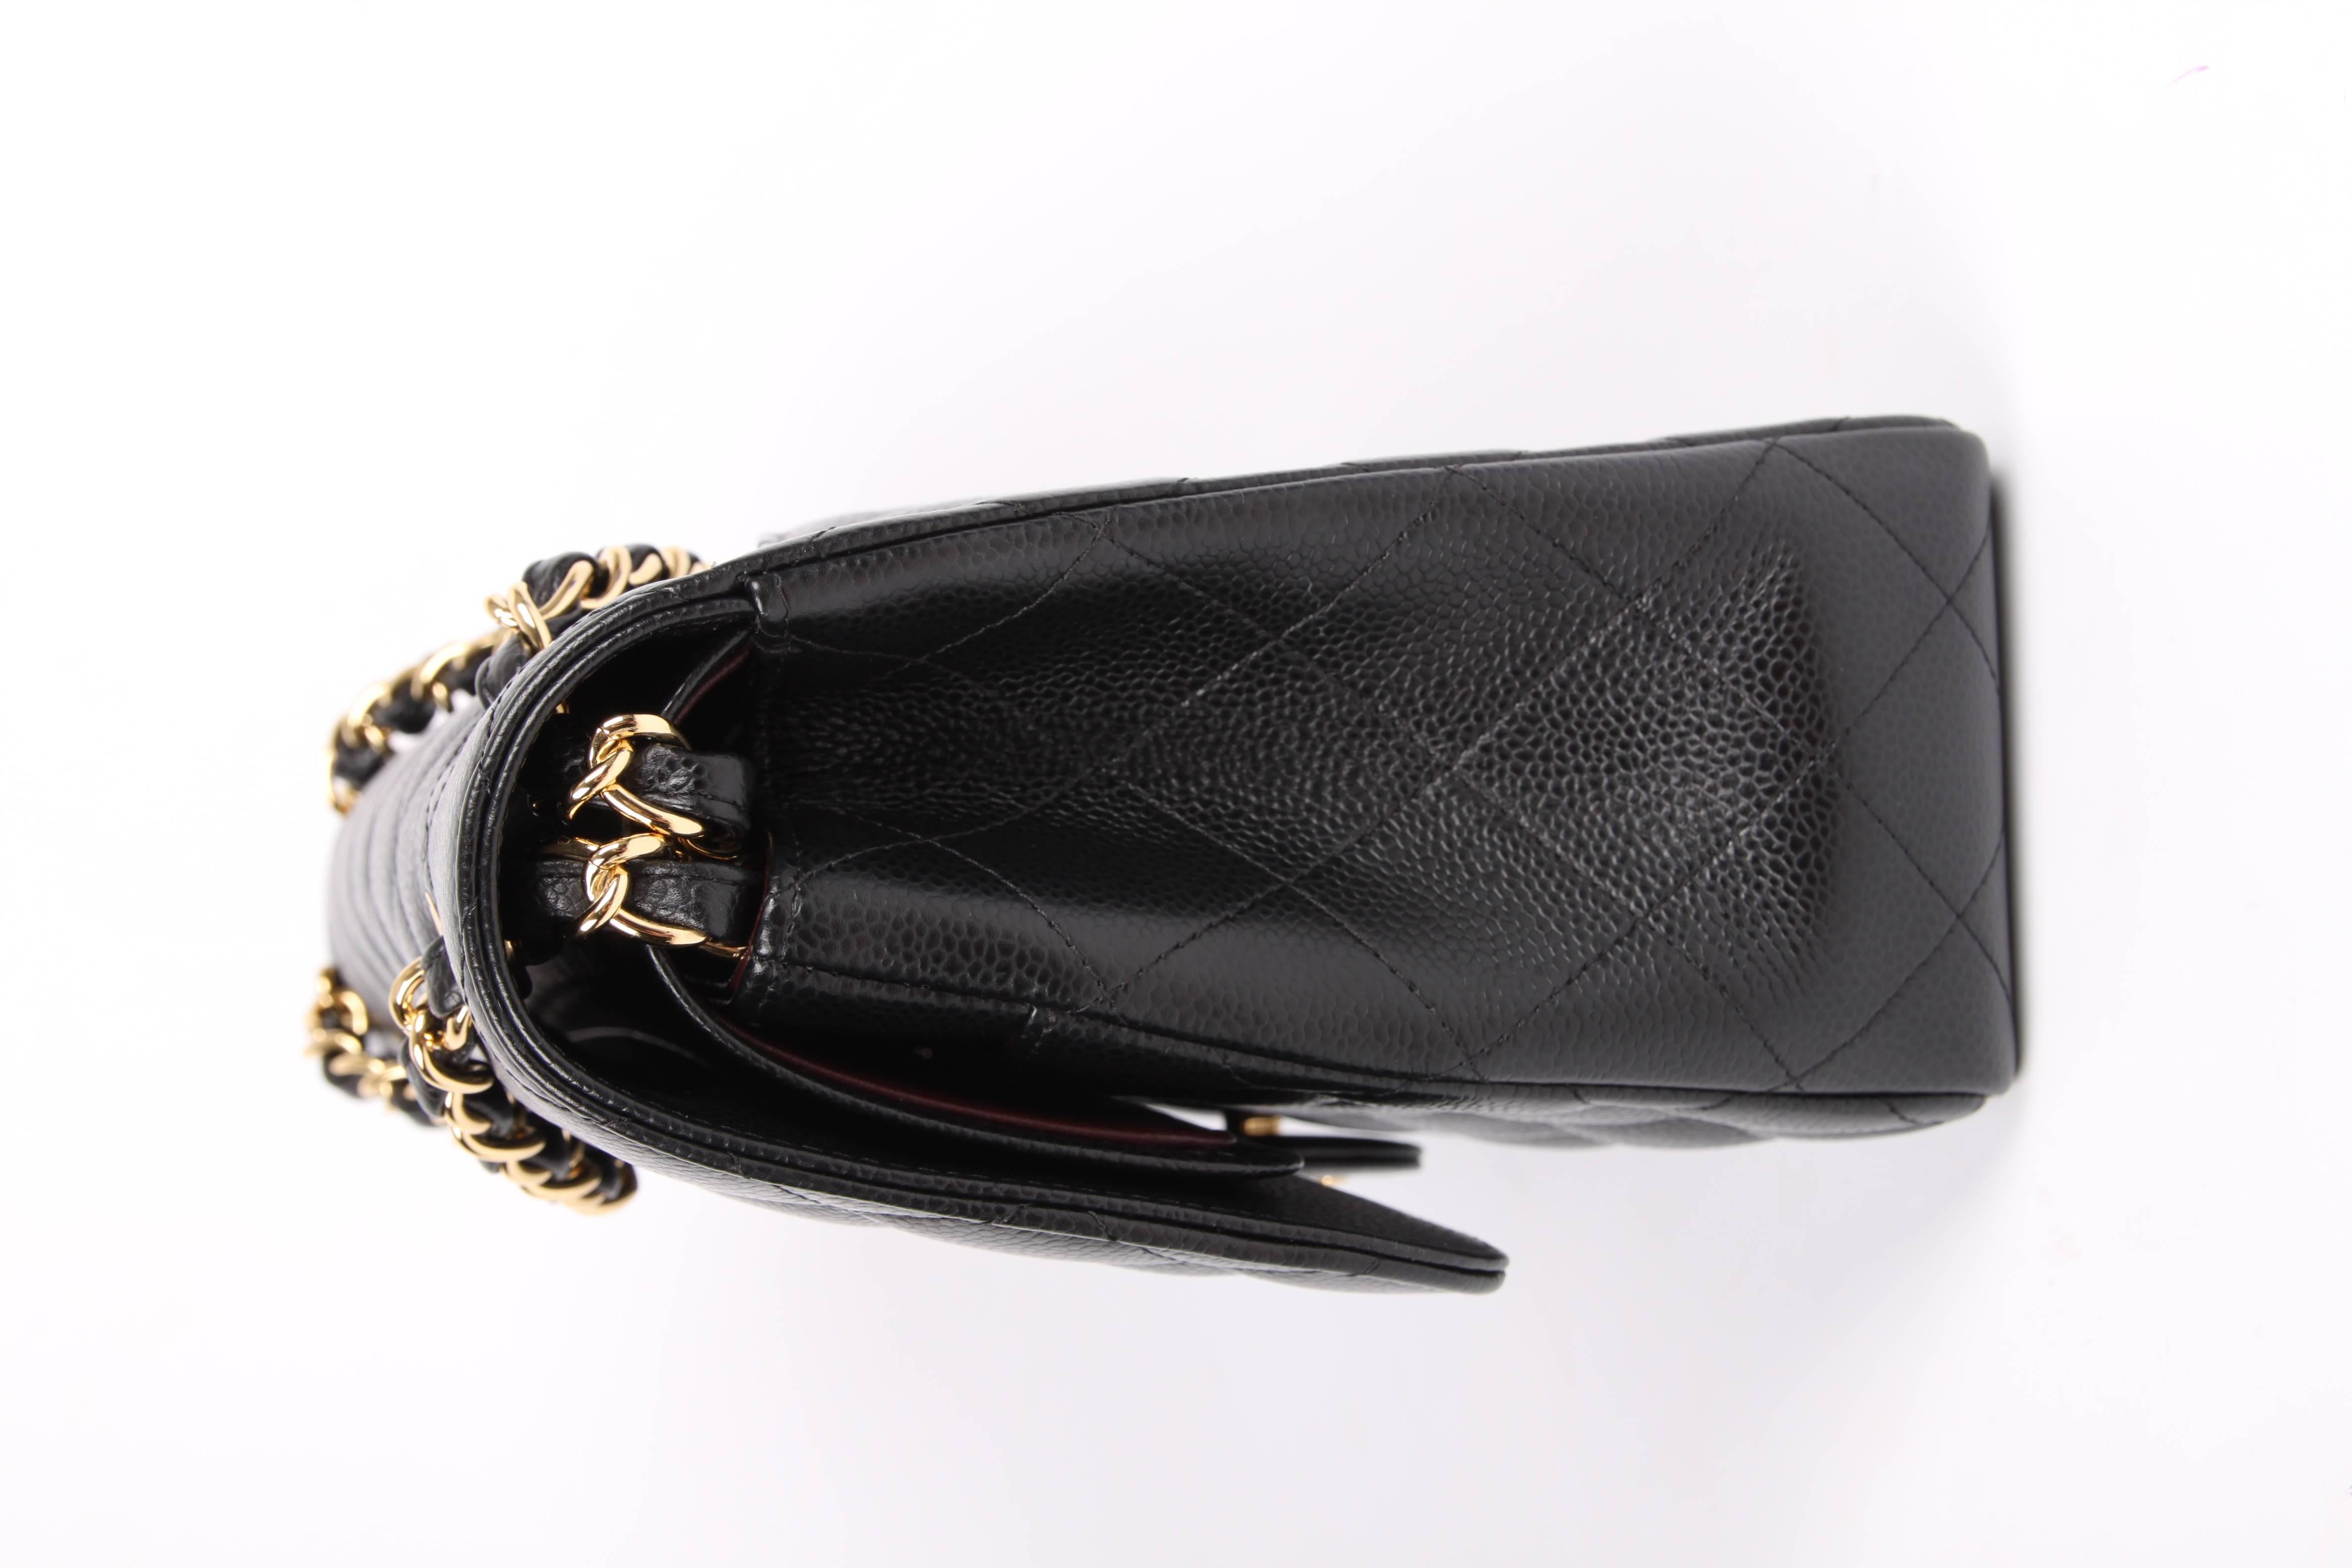 Black       Chanel 2.55 Timeless Jumbo Double Flap Bag - black caviar leather/gold Cha